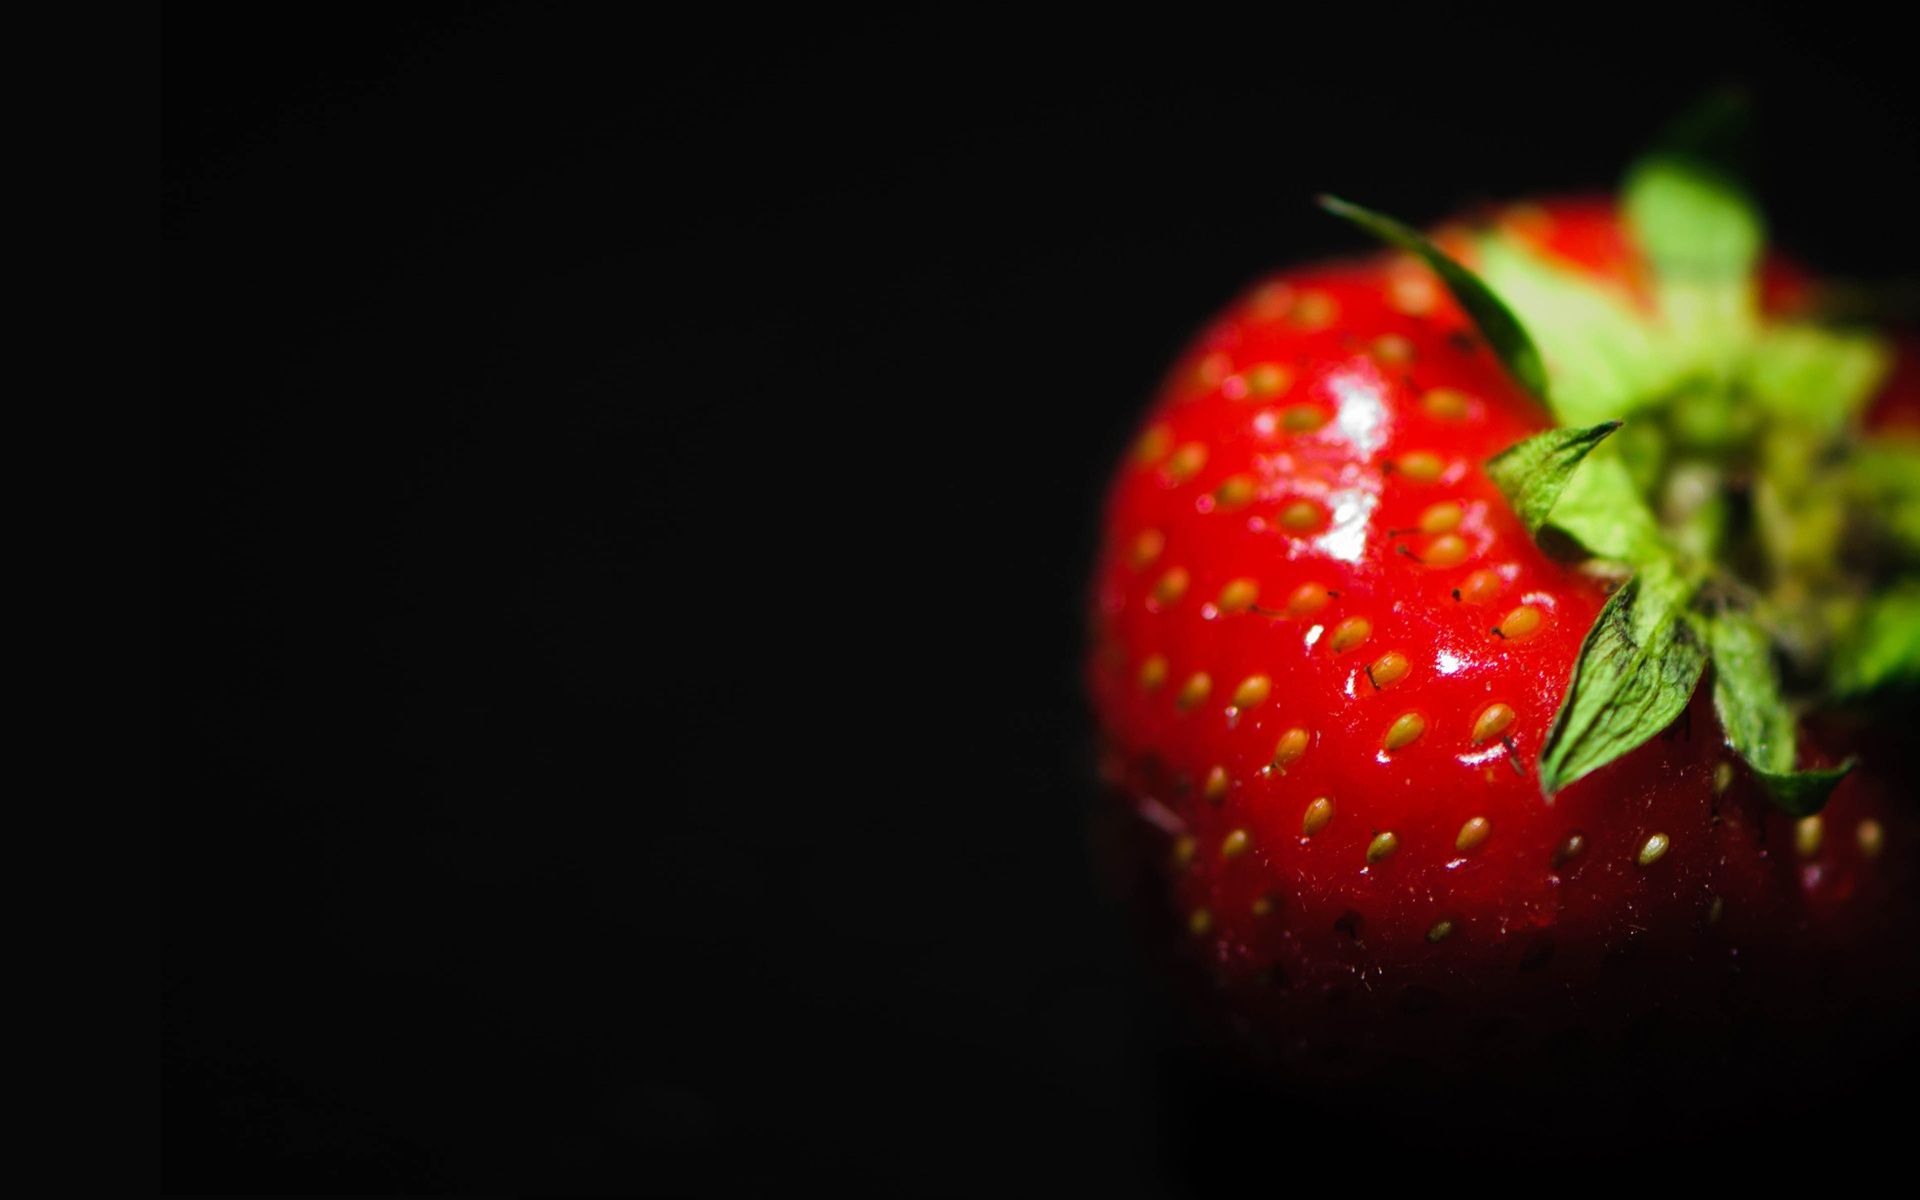 Strawberries Wallpapers for desktop high definition download